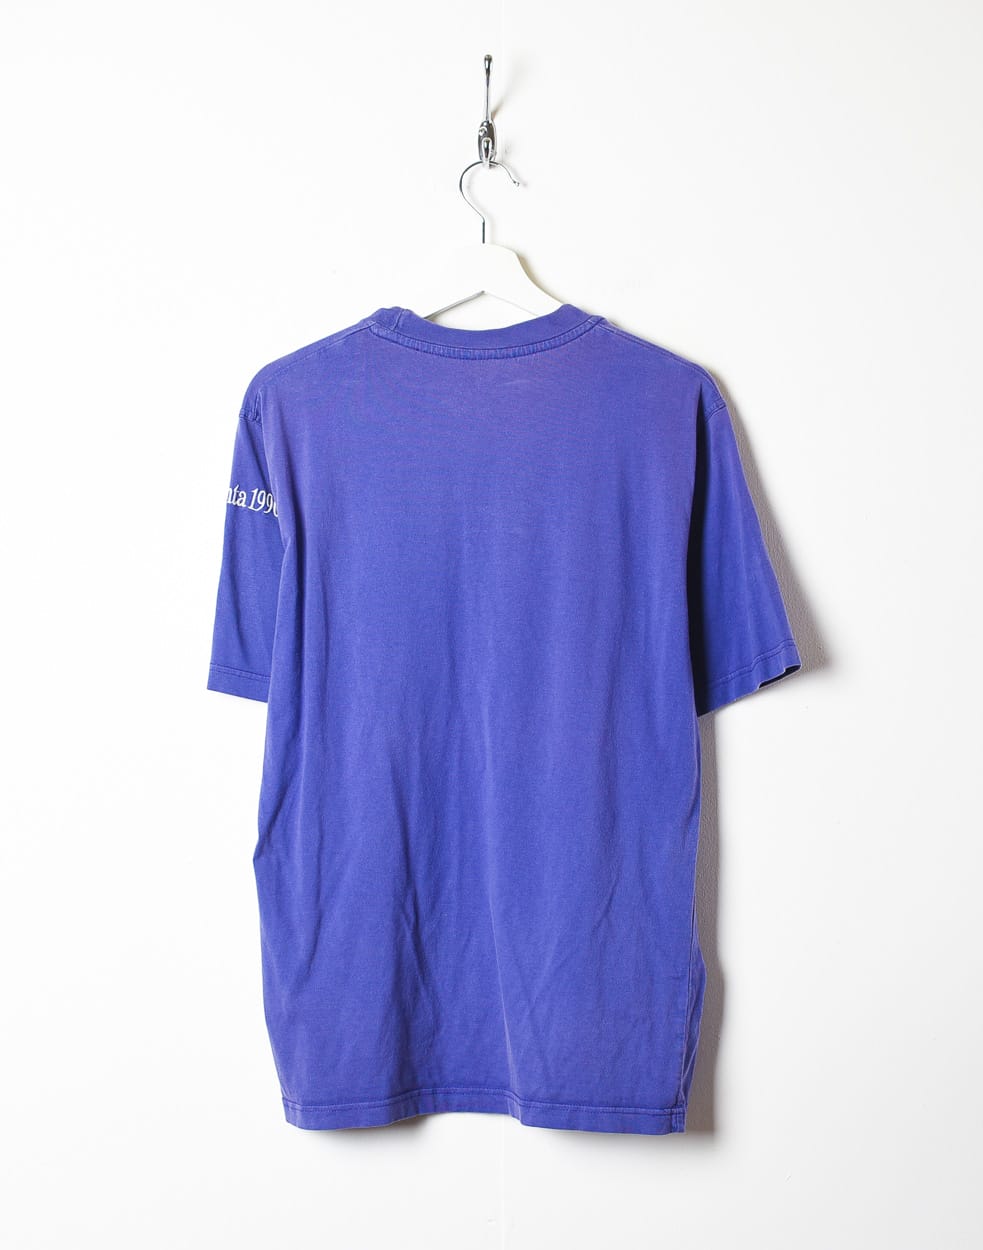 Purple Adidas Atlanta 1996 Olympics T-Shirt - Large